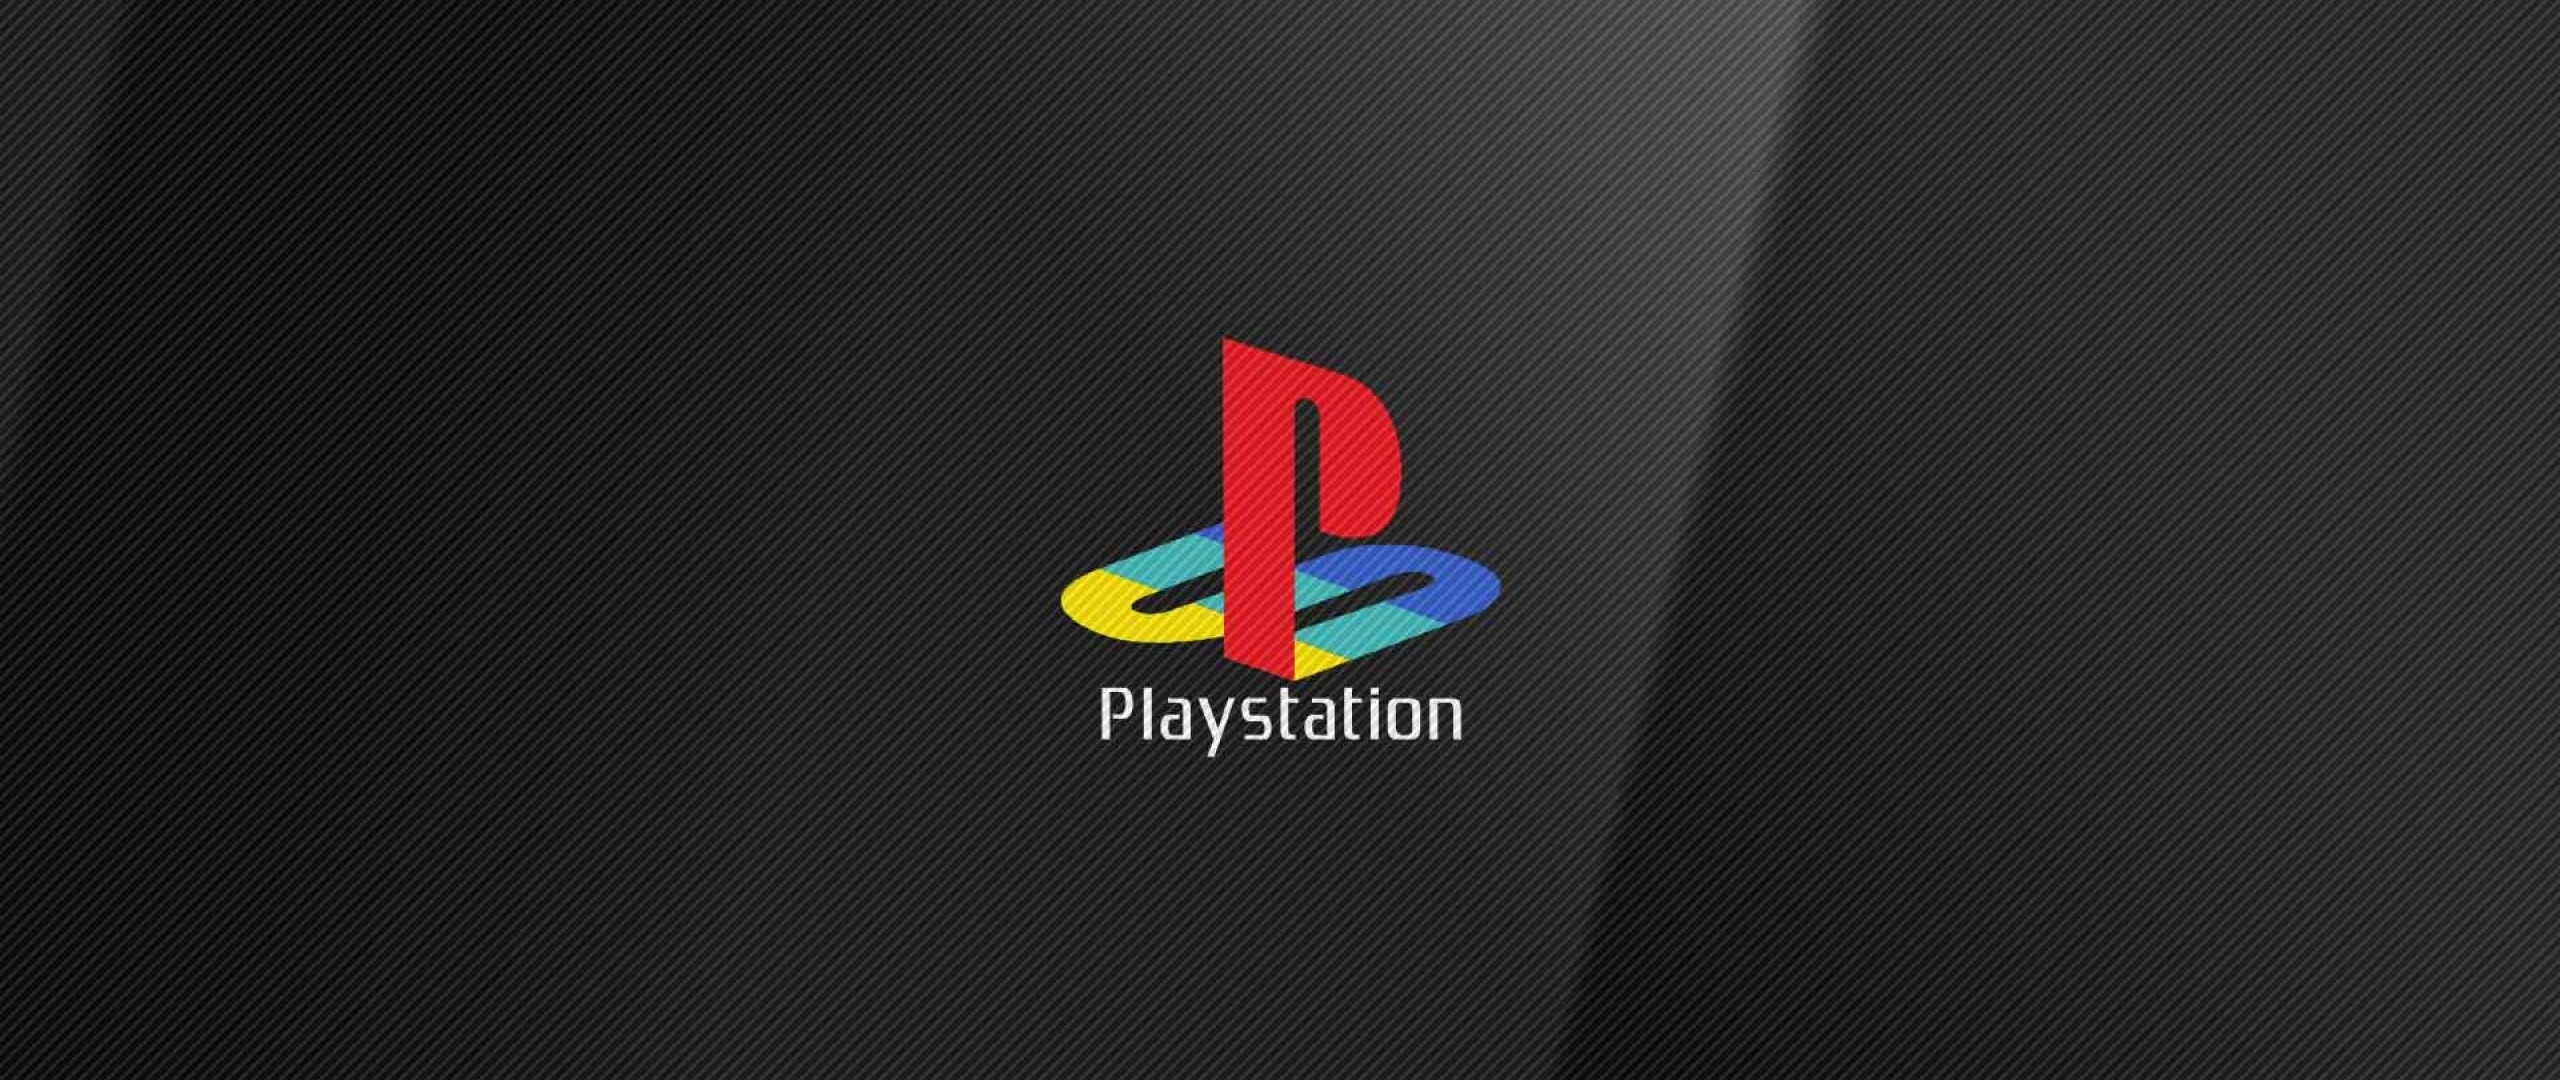 Заставка playstation. Sony PLAYSTATION 1 logo. Логотип Sony PLAYSTATION 3. Обои на рабочий стол PLAYSTATION. Логотип на рабочий стол.